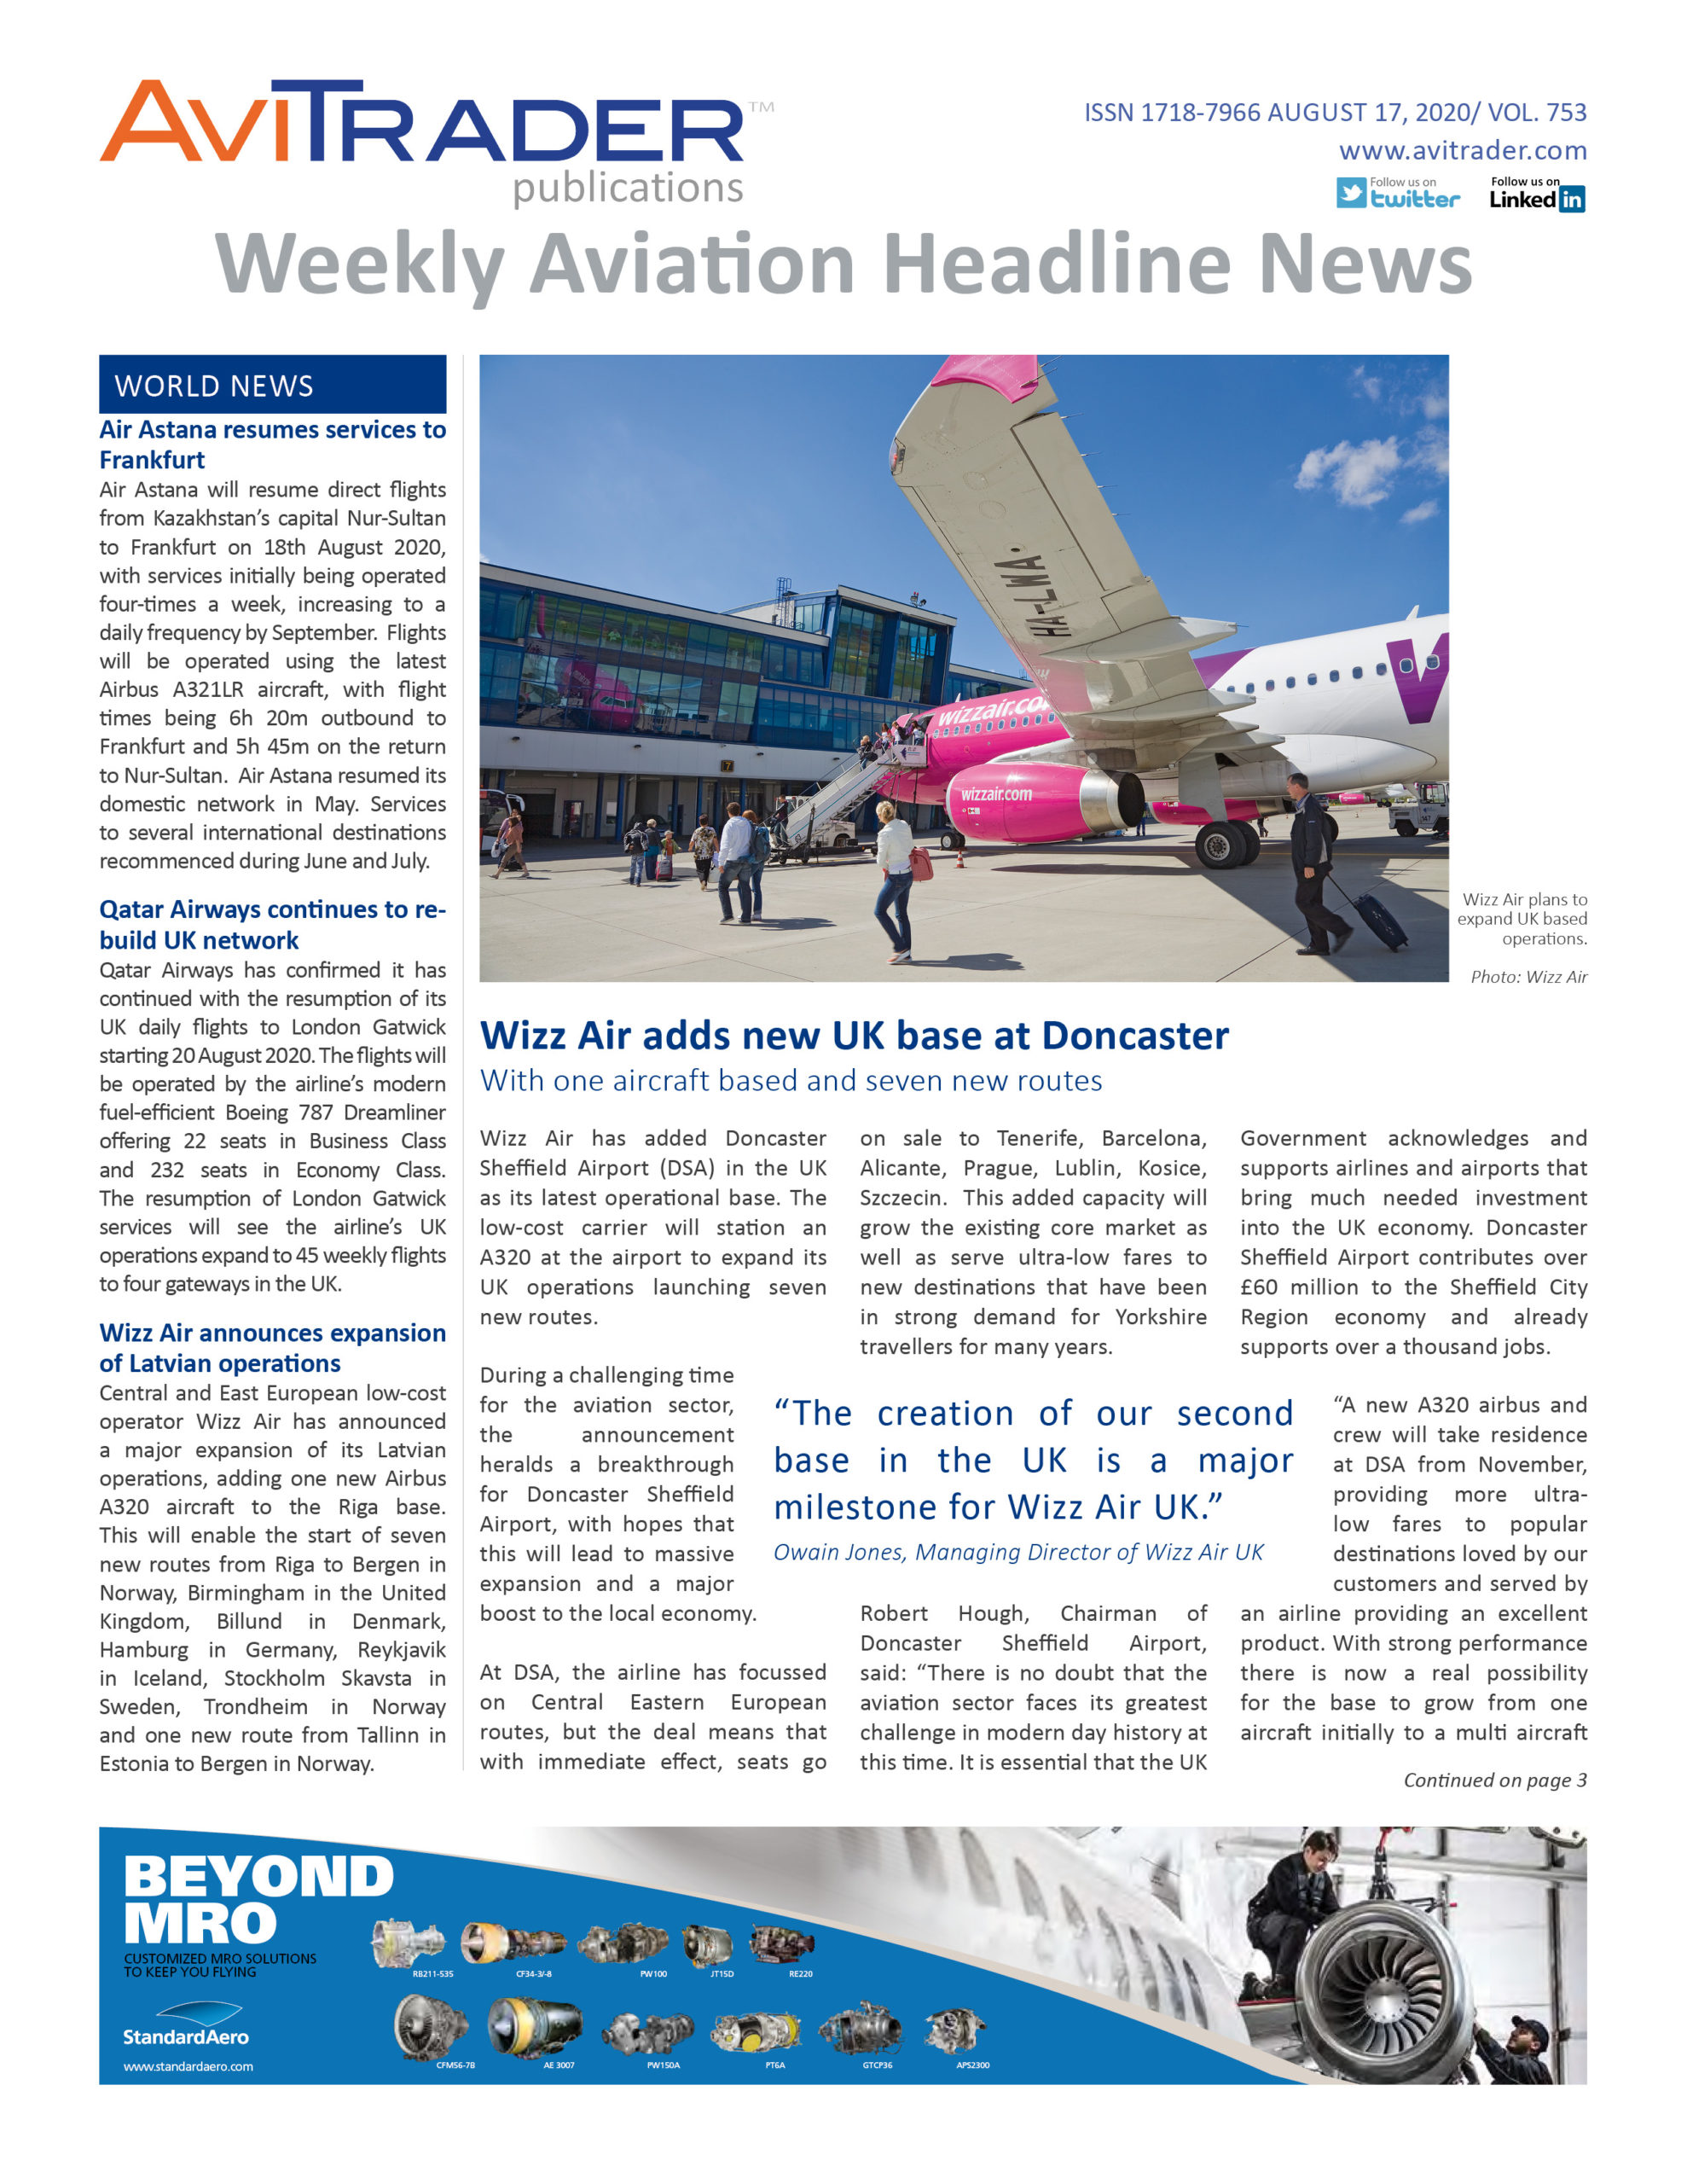 AviTrader_Weekly_Headline_News_Cover_2020-08-10